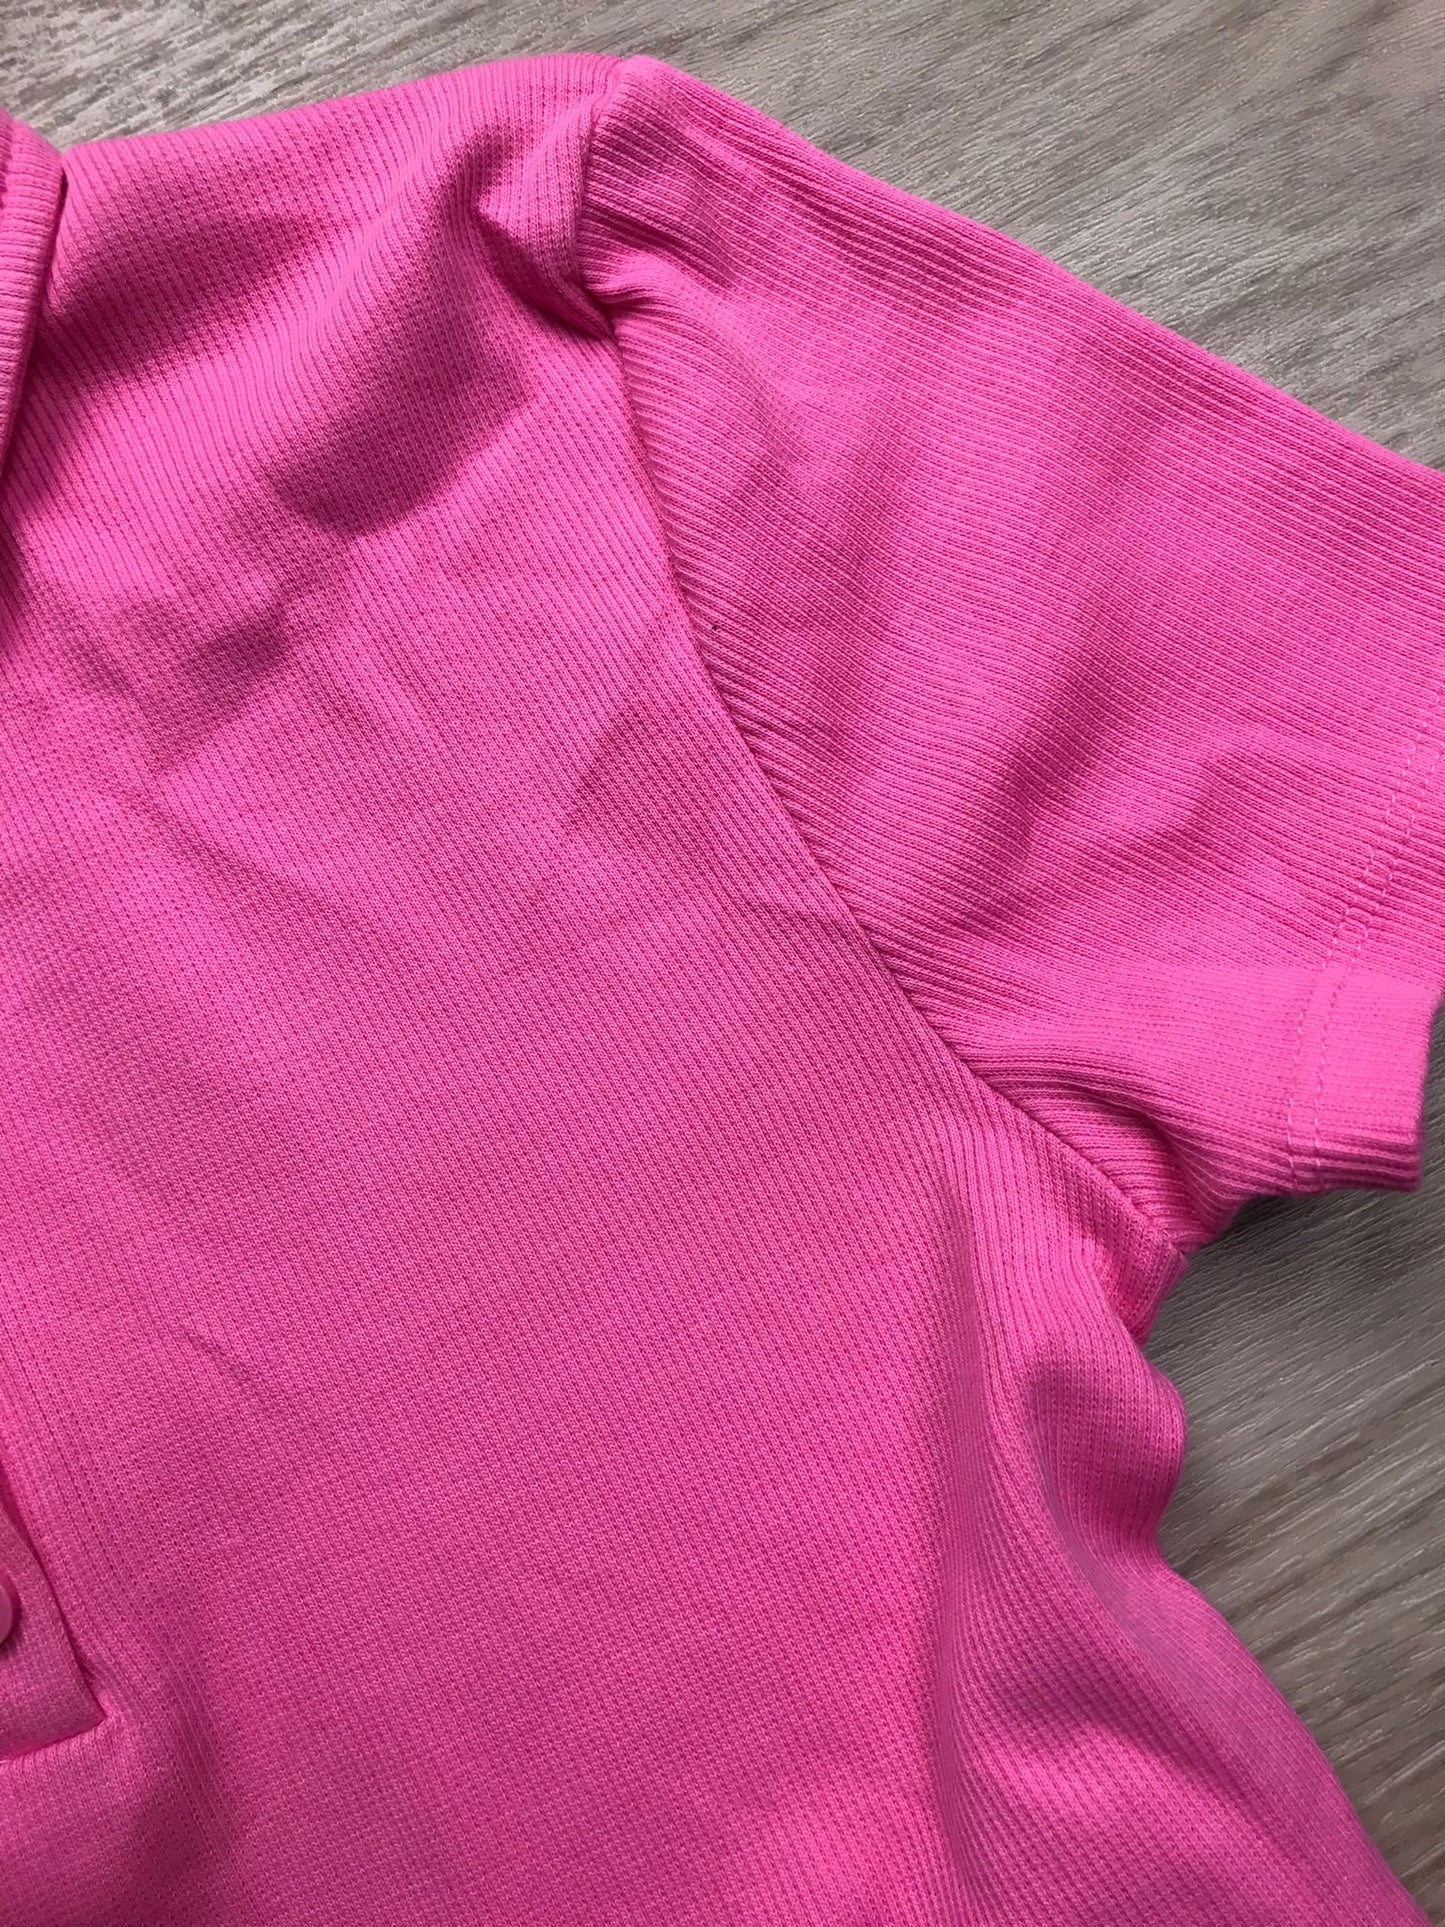 Shirt pink kurz